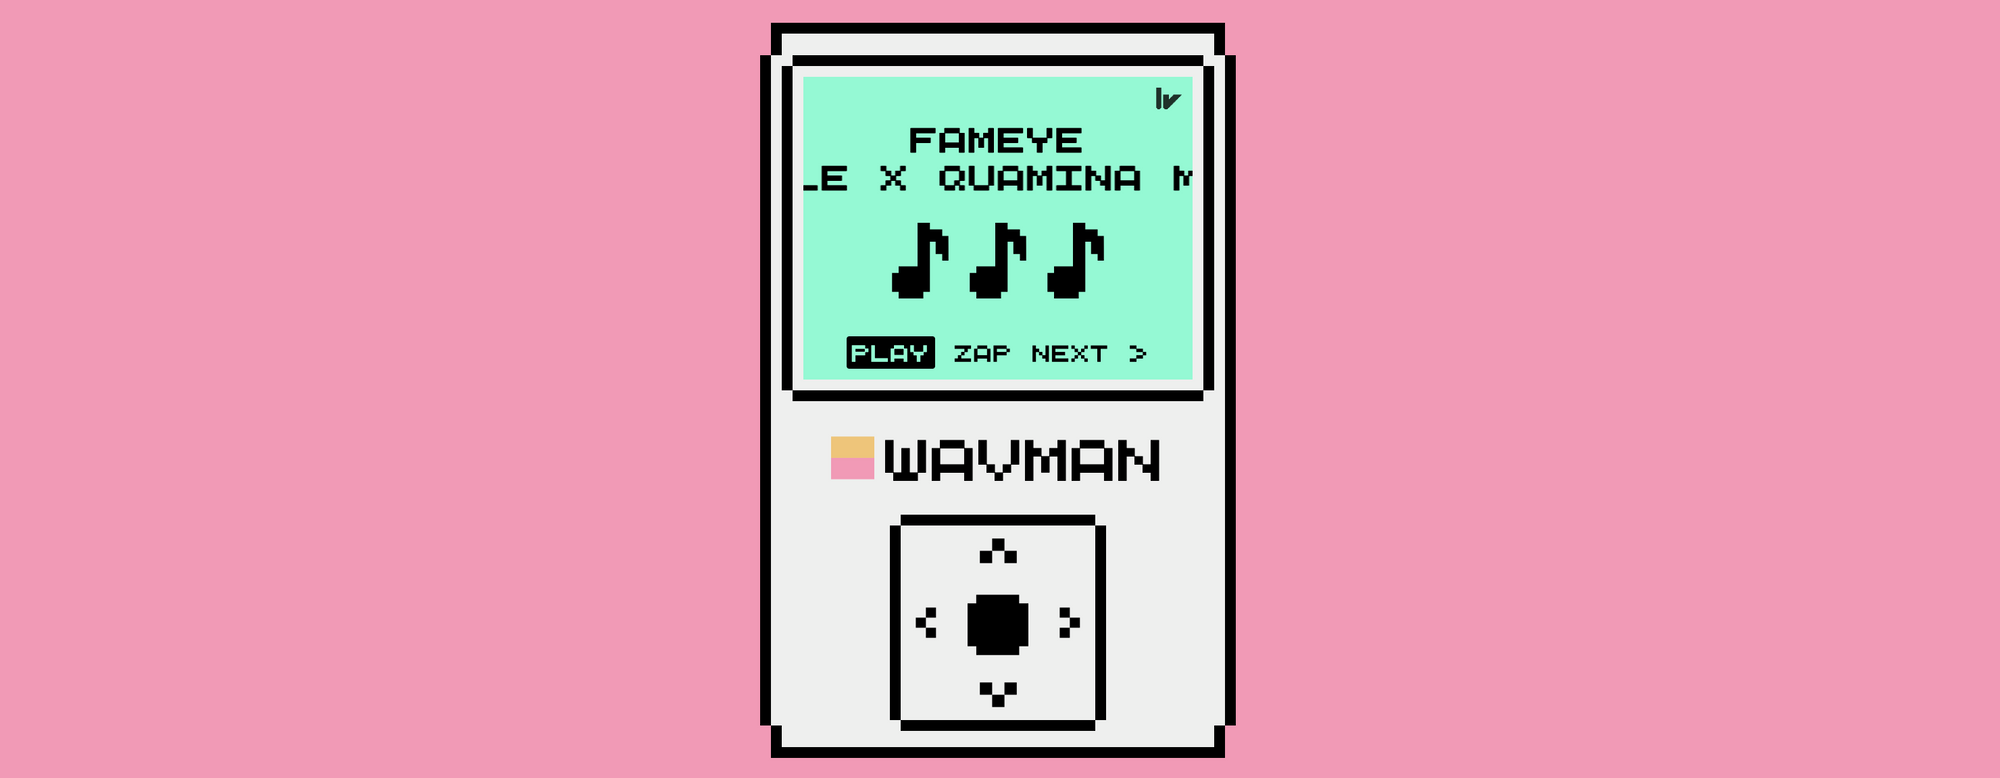 Screenshot of Wavman music player